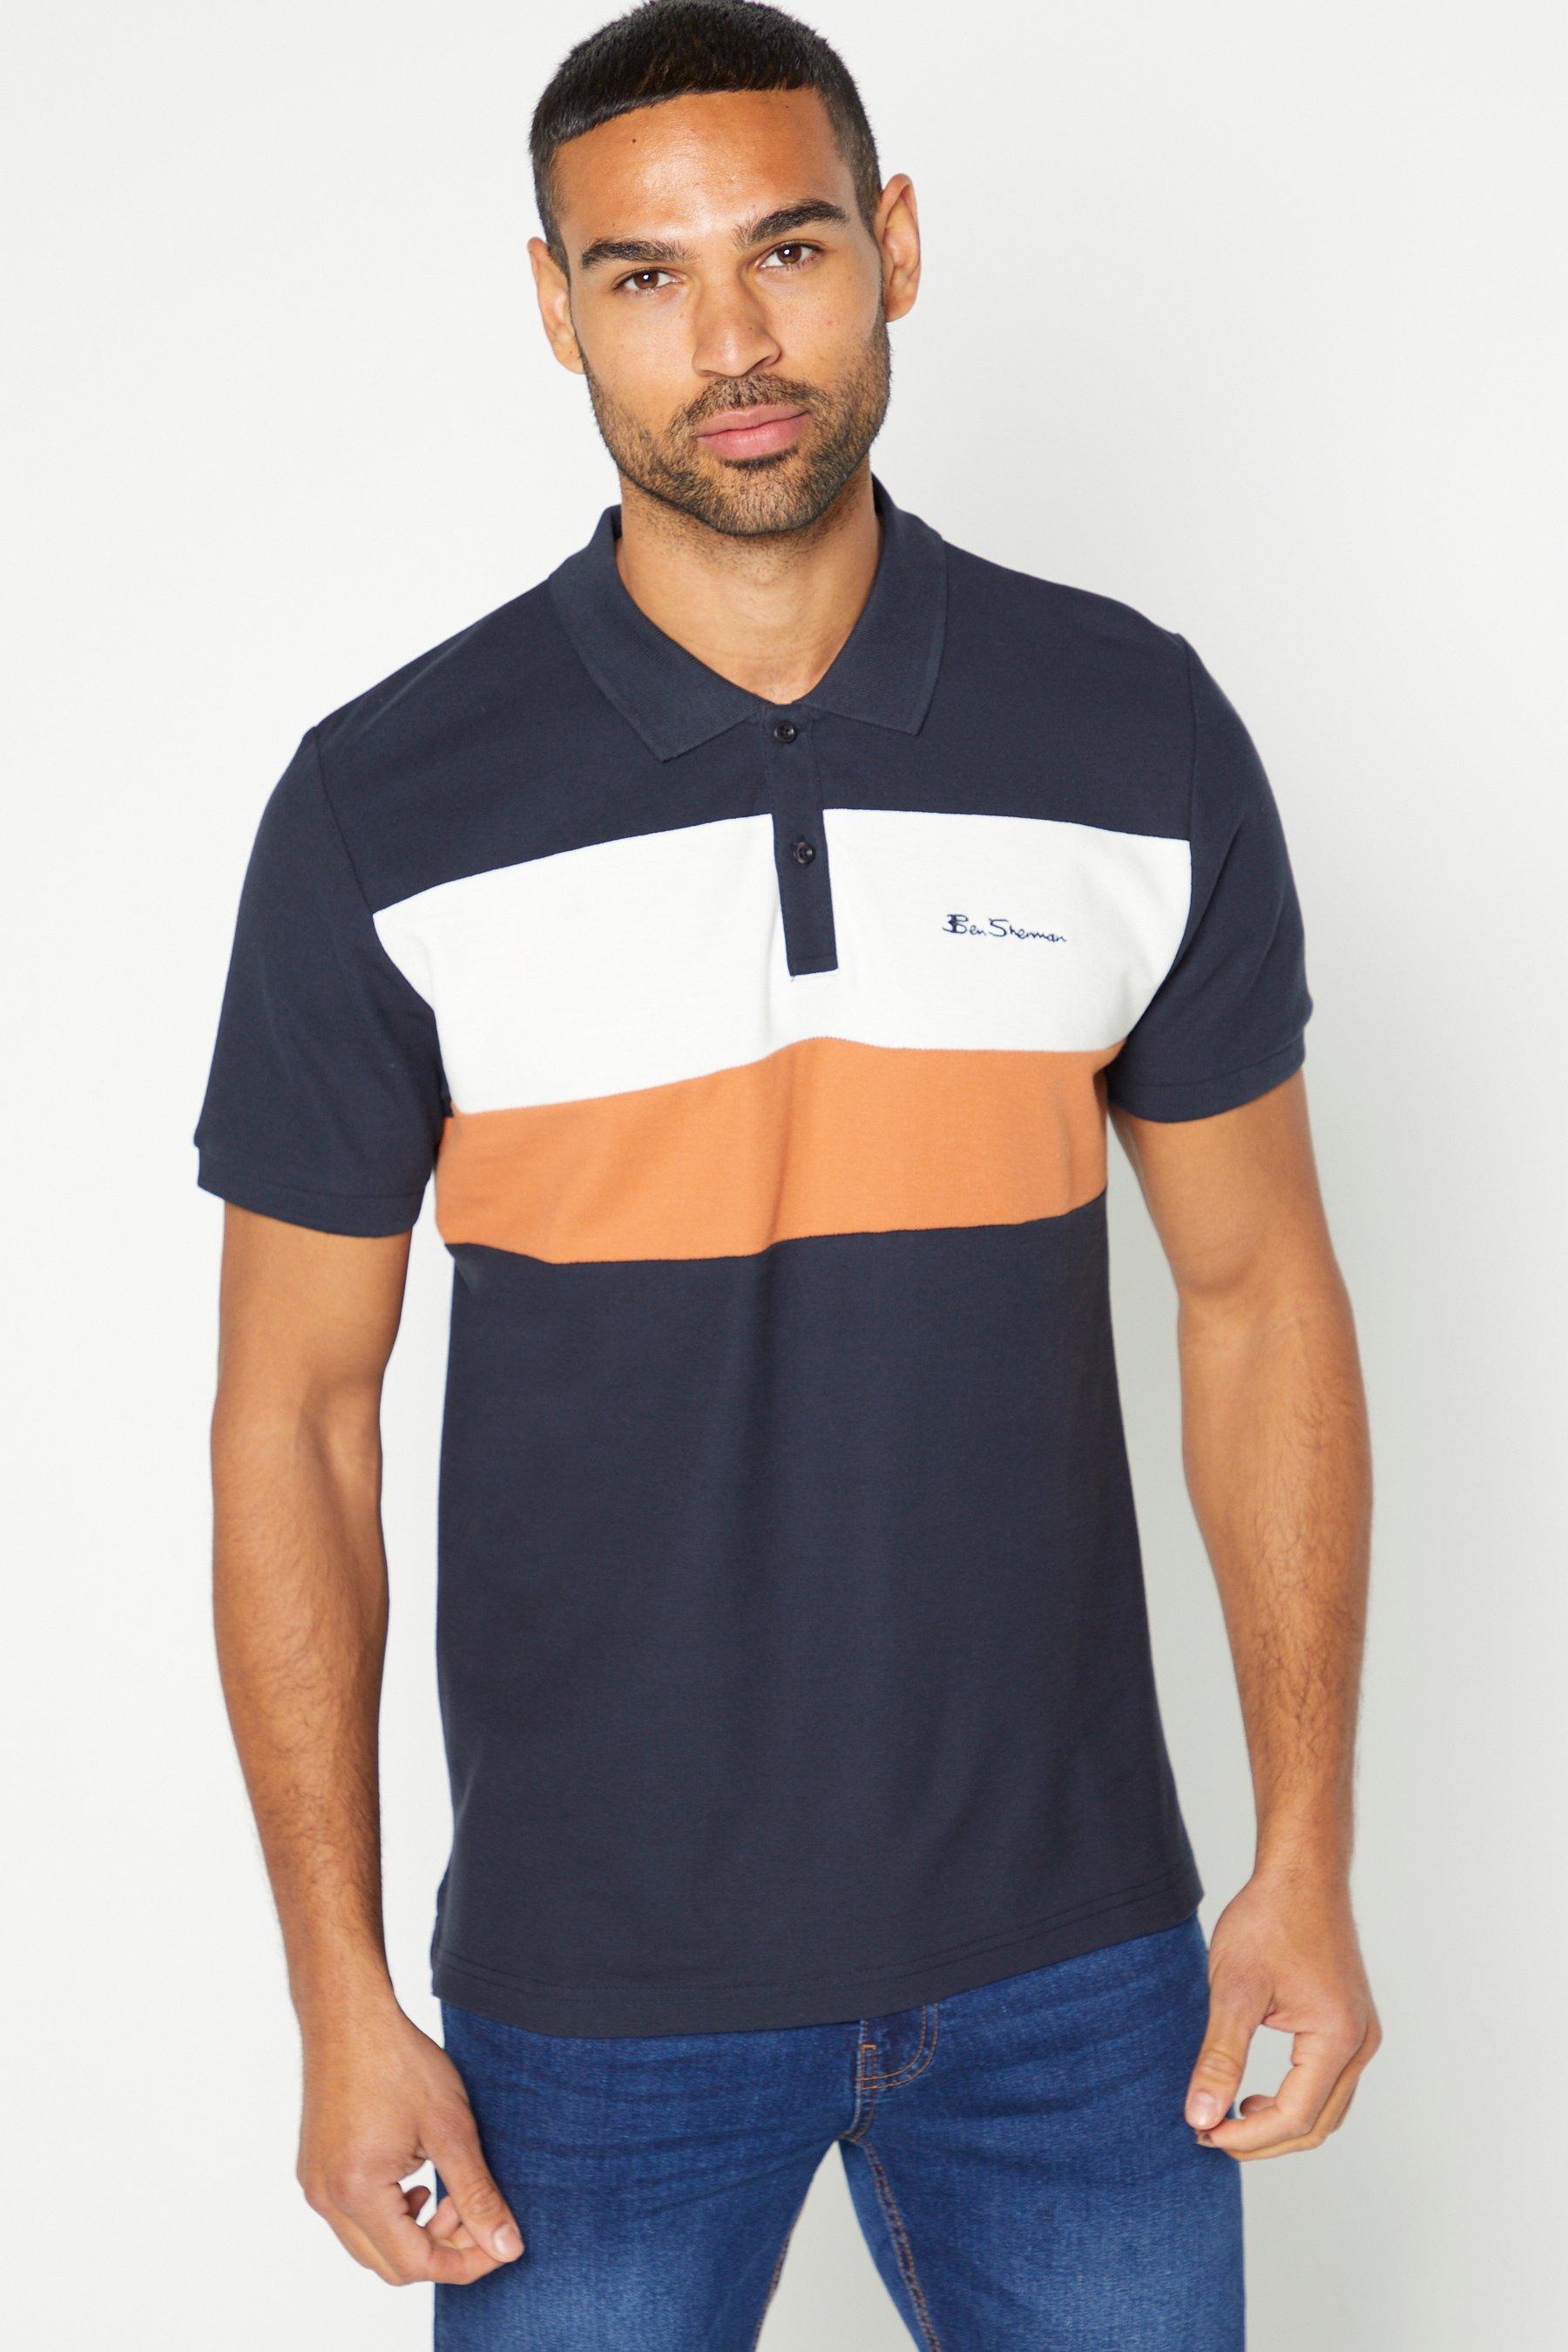 ben sherman navy/orange colourblock polo shirt - mens - blue - size: xl